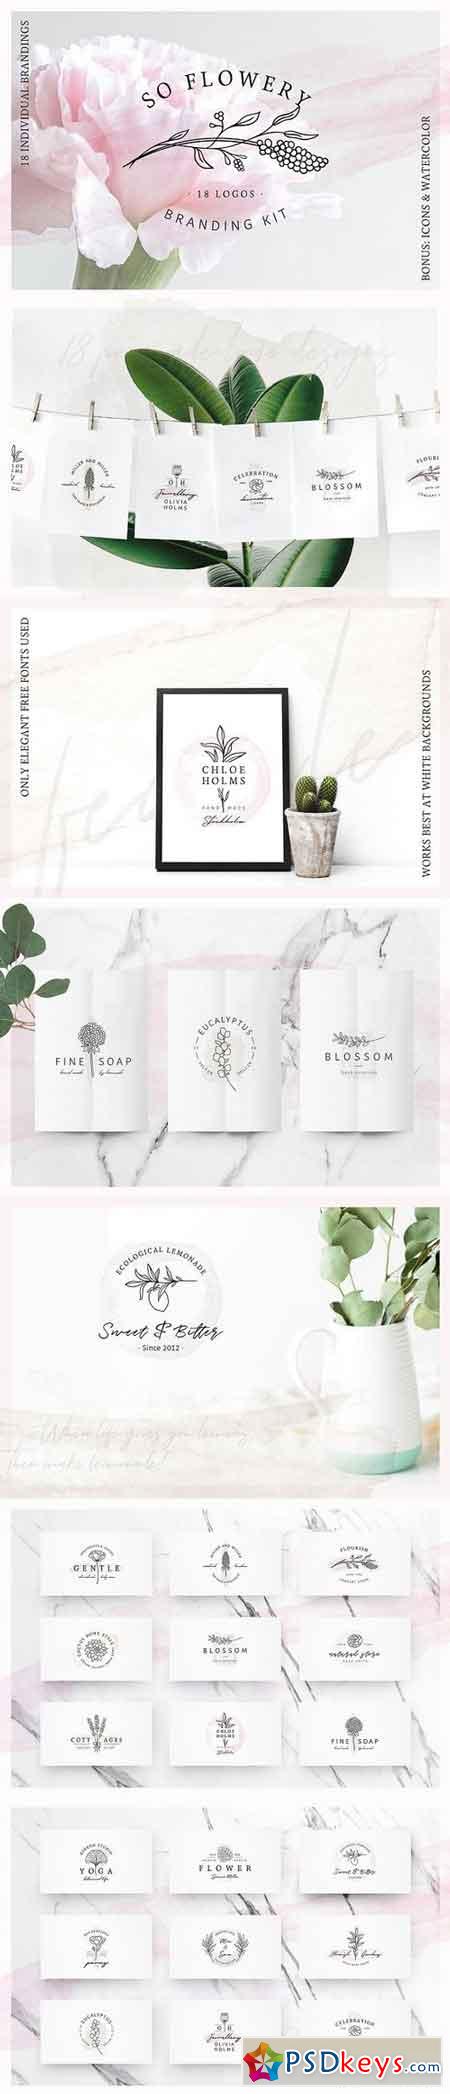 So Flowery Branding Kit+Watercolours 2311711